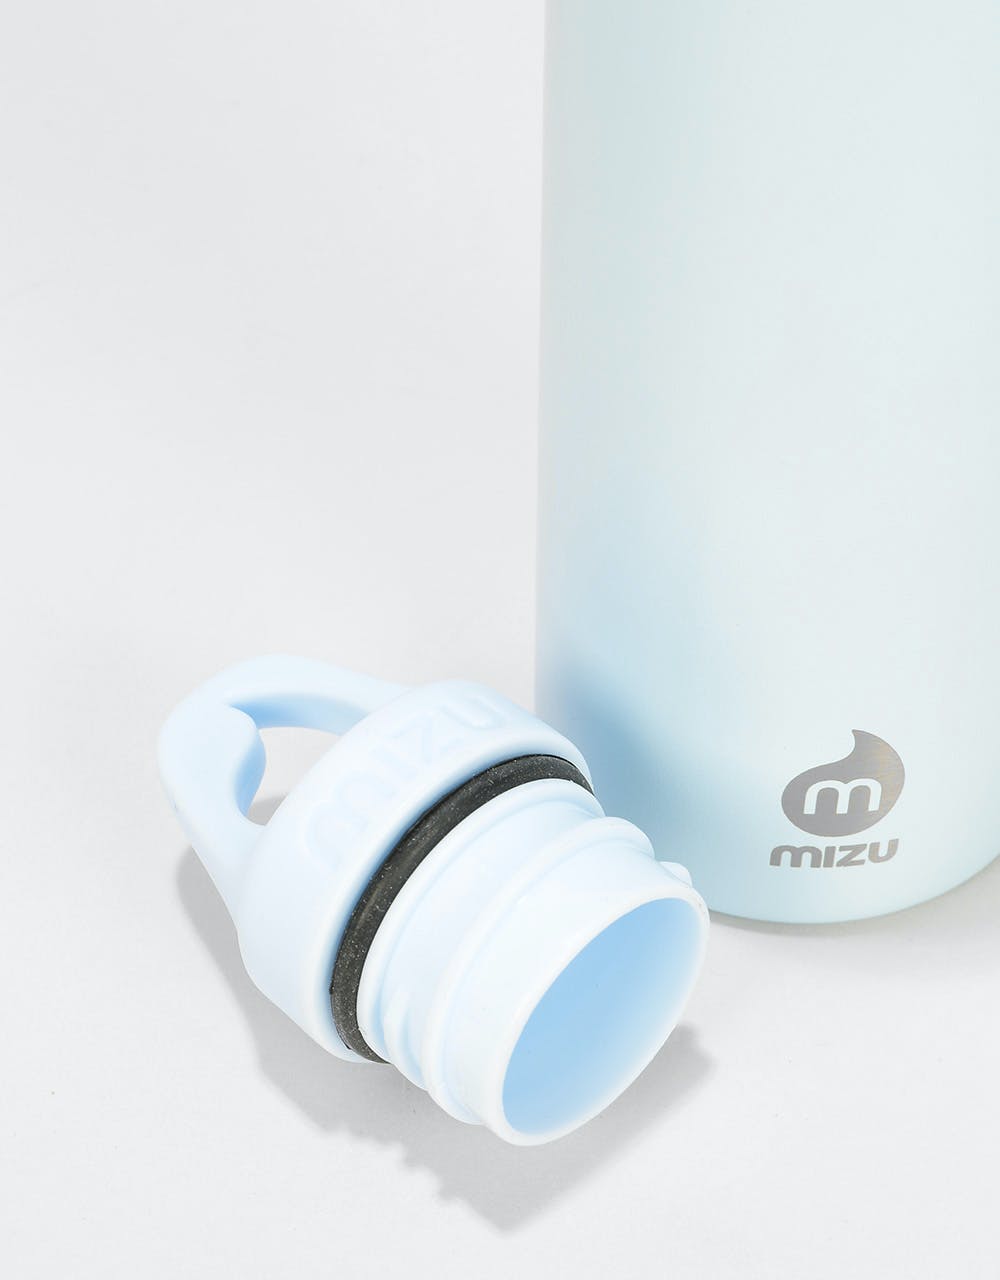 Mizu M5 Single Wall 530ml/18oz Water Bottle - Ice Blue